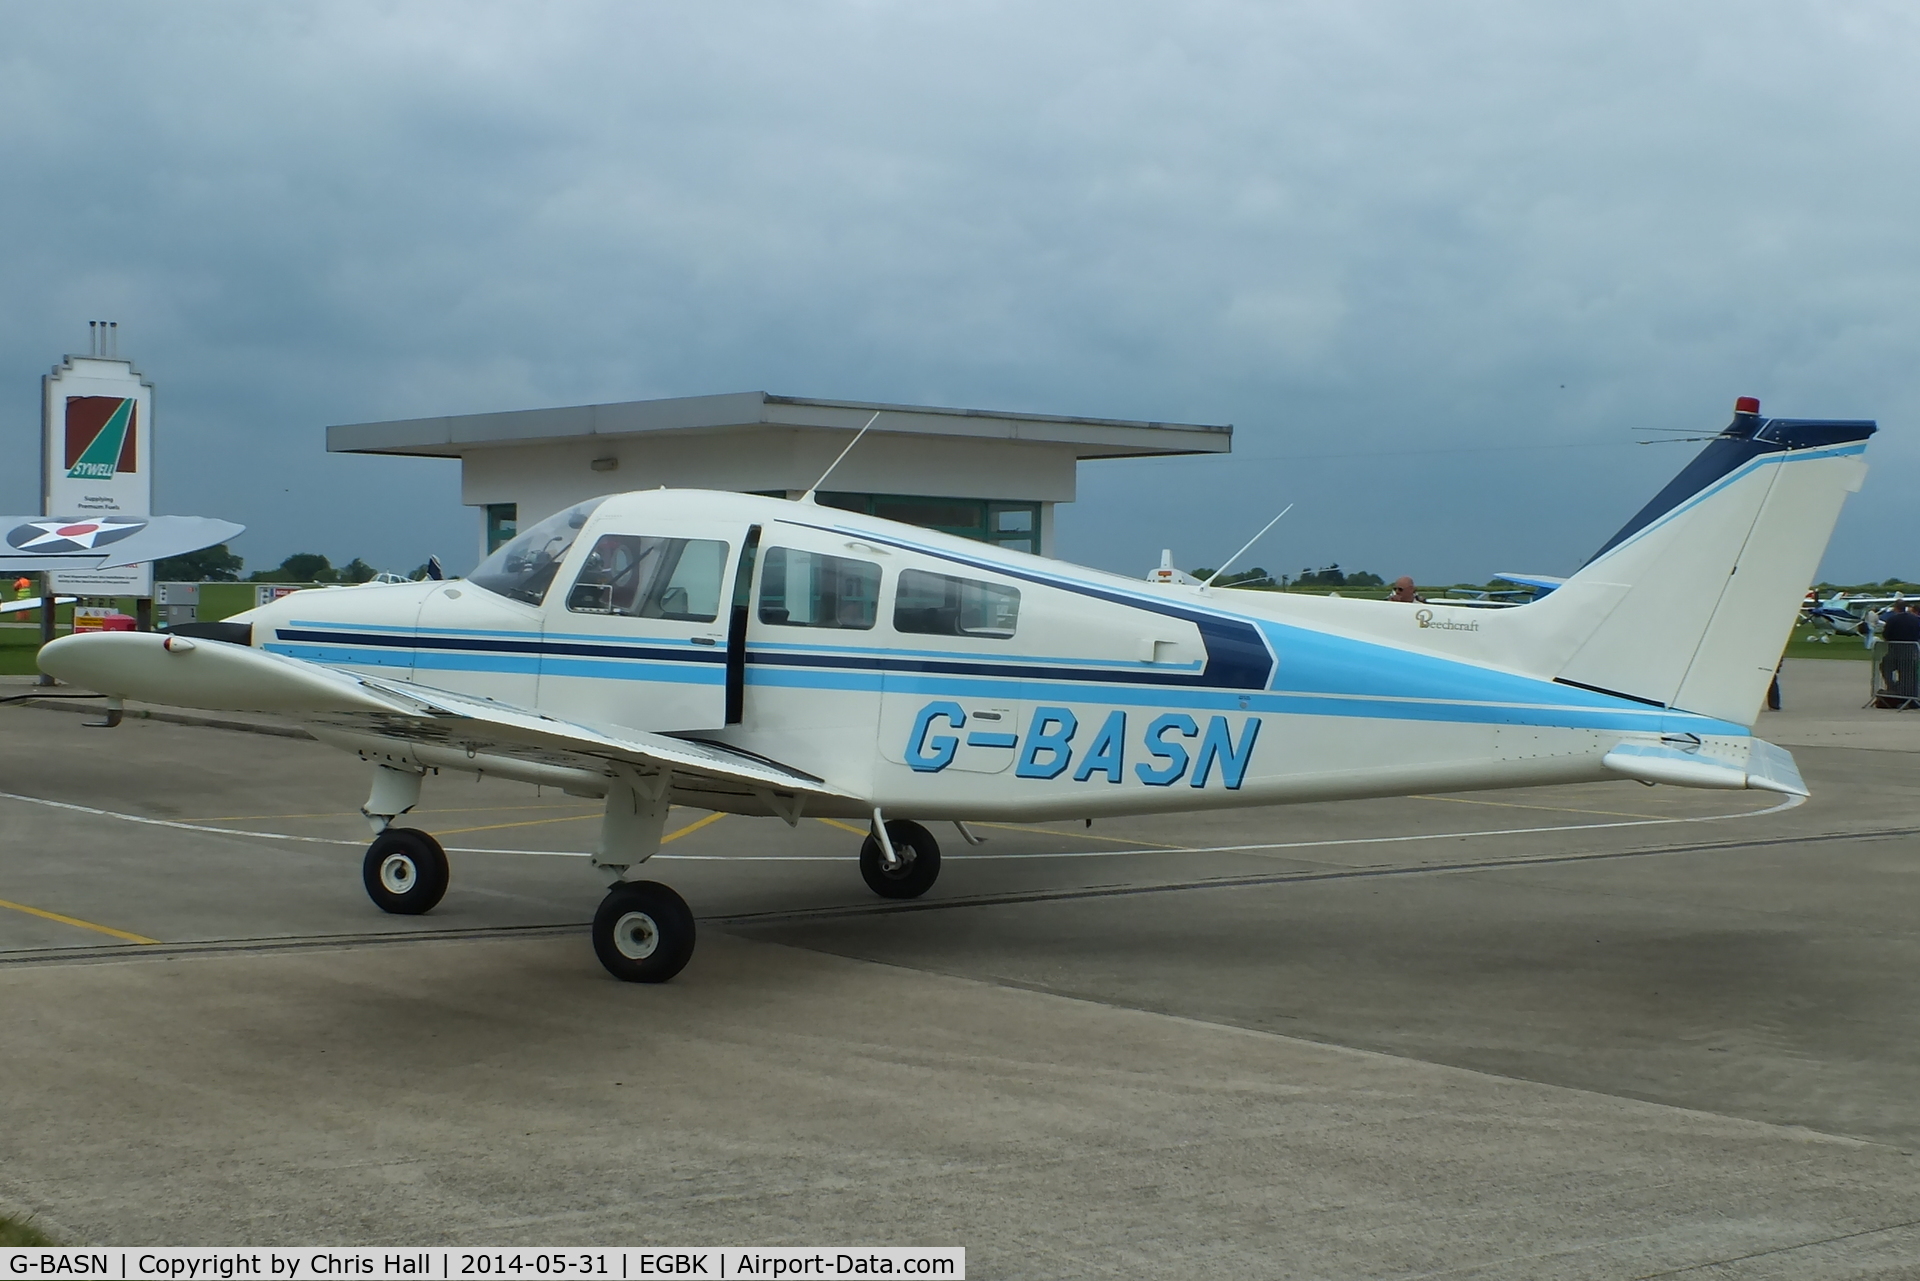 G-BASN, 1973 Beech C23 Sundowner 180 Sundowner 180 C/N M-1476, at AeroExpo 2014